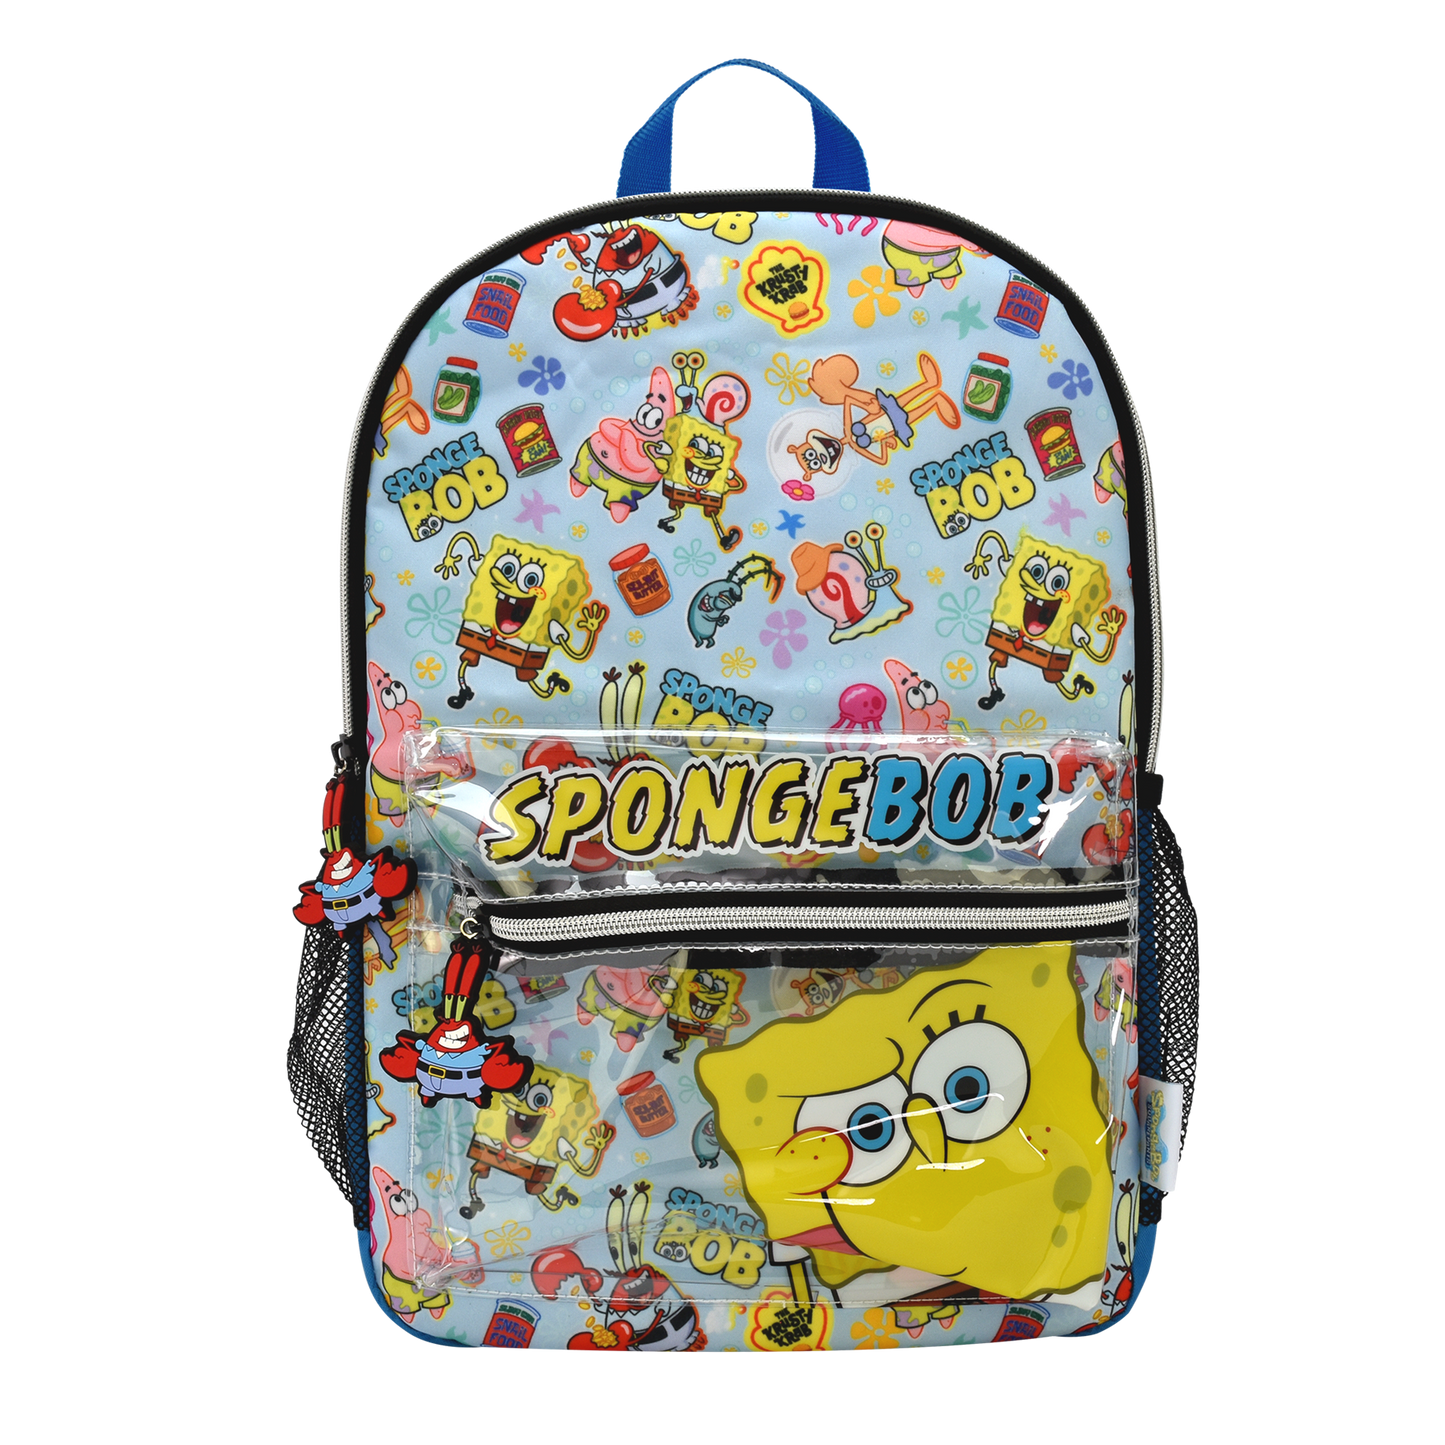 Spongebob Squarepants Back to School Set